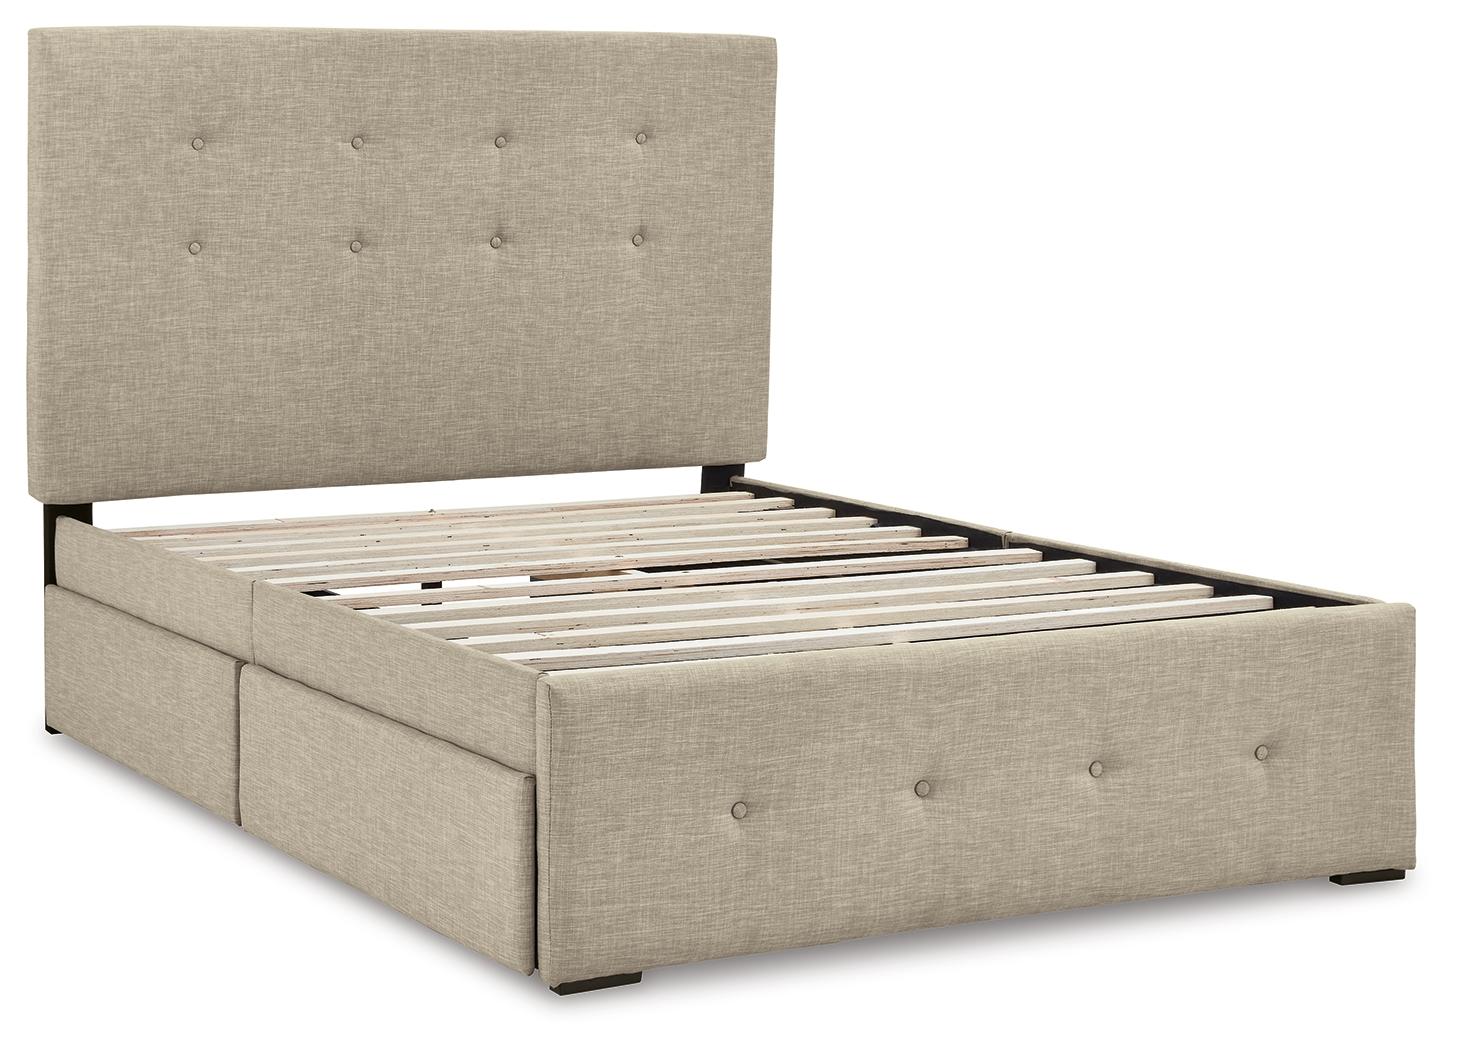 ASHLEY FURNITURE B092B1 Gladdinson Full Upholstered Storage Bed